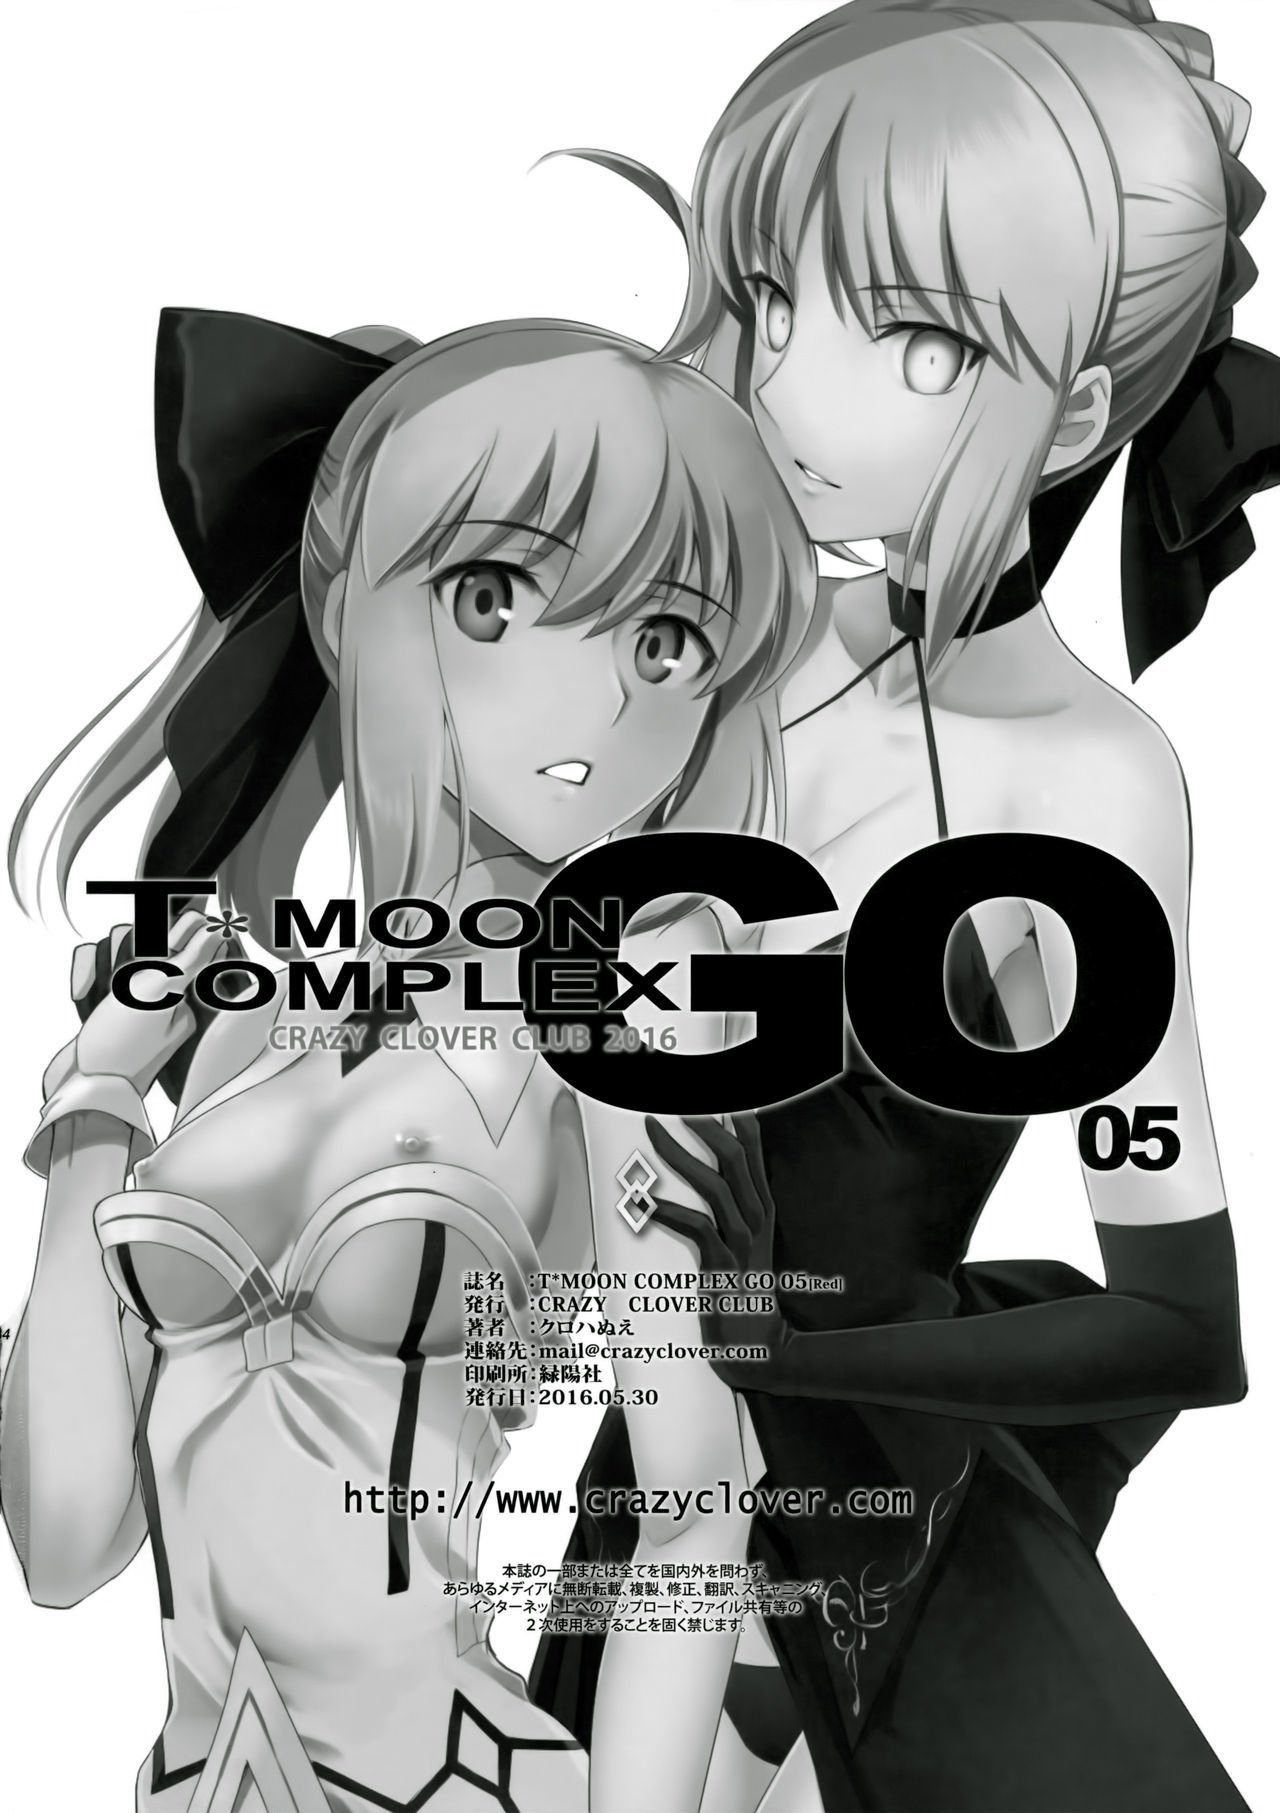 TMOON COMPLEX GO 05